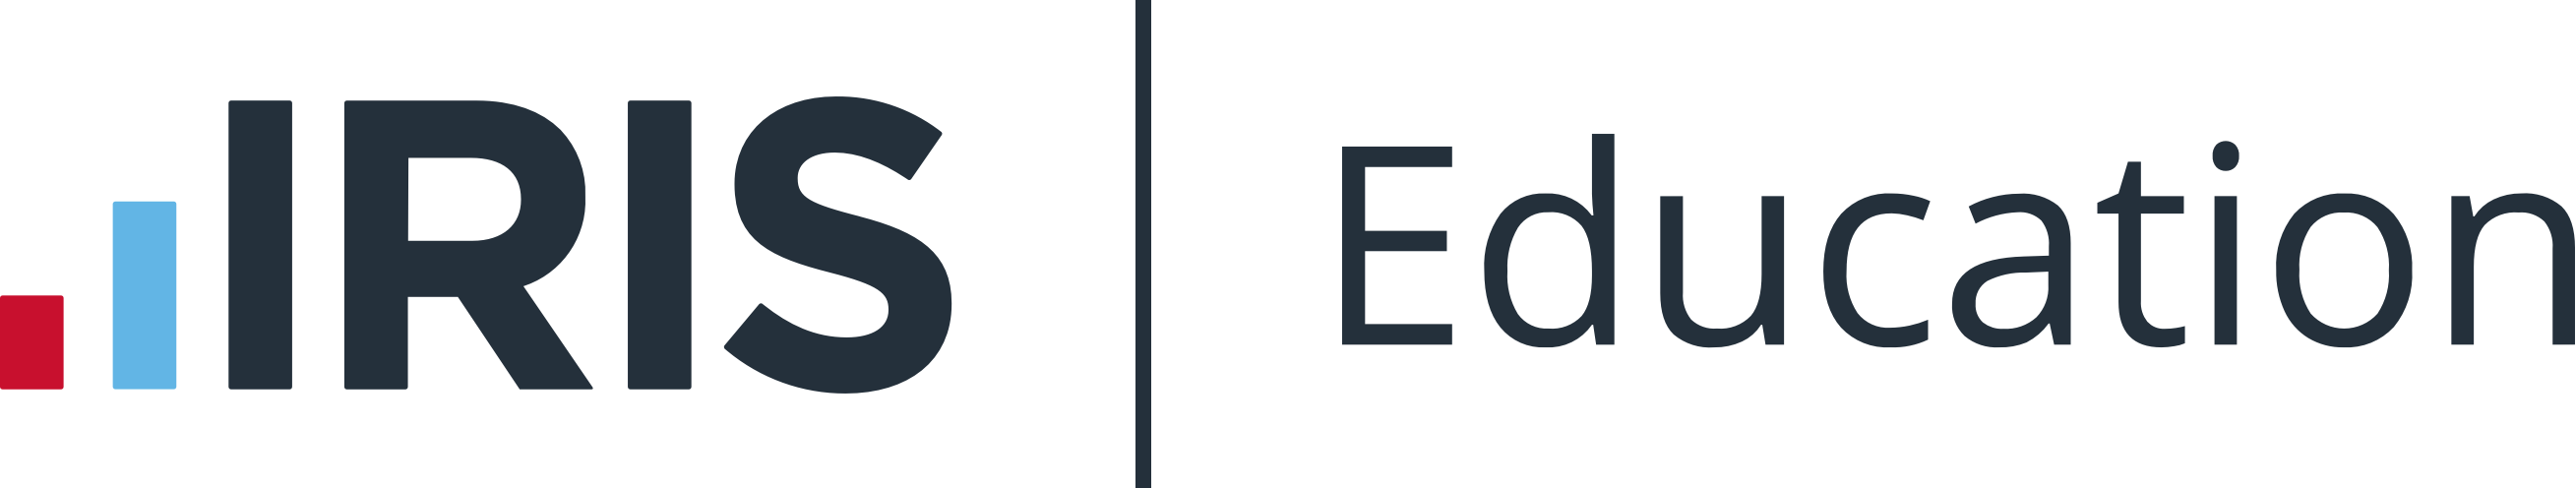 Iris Eduction Logo